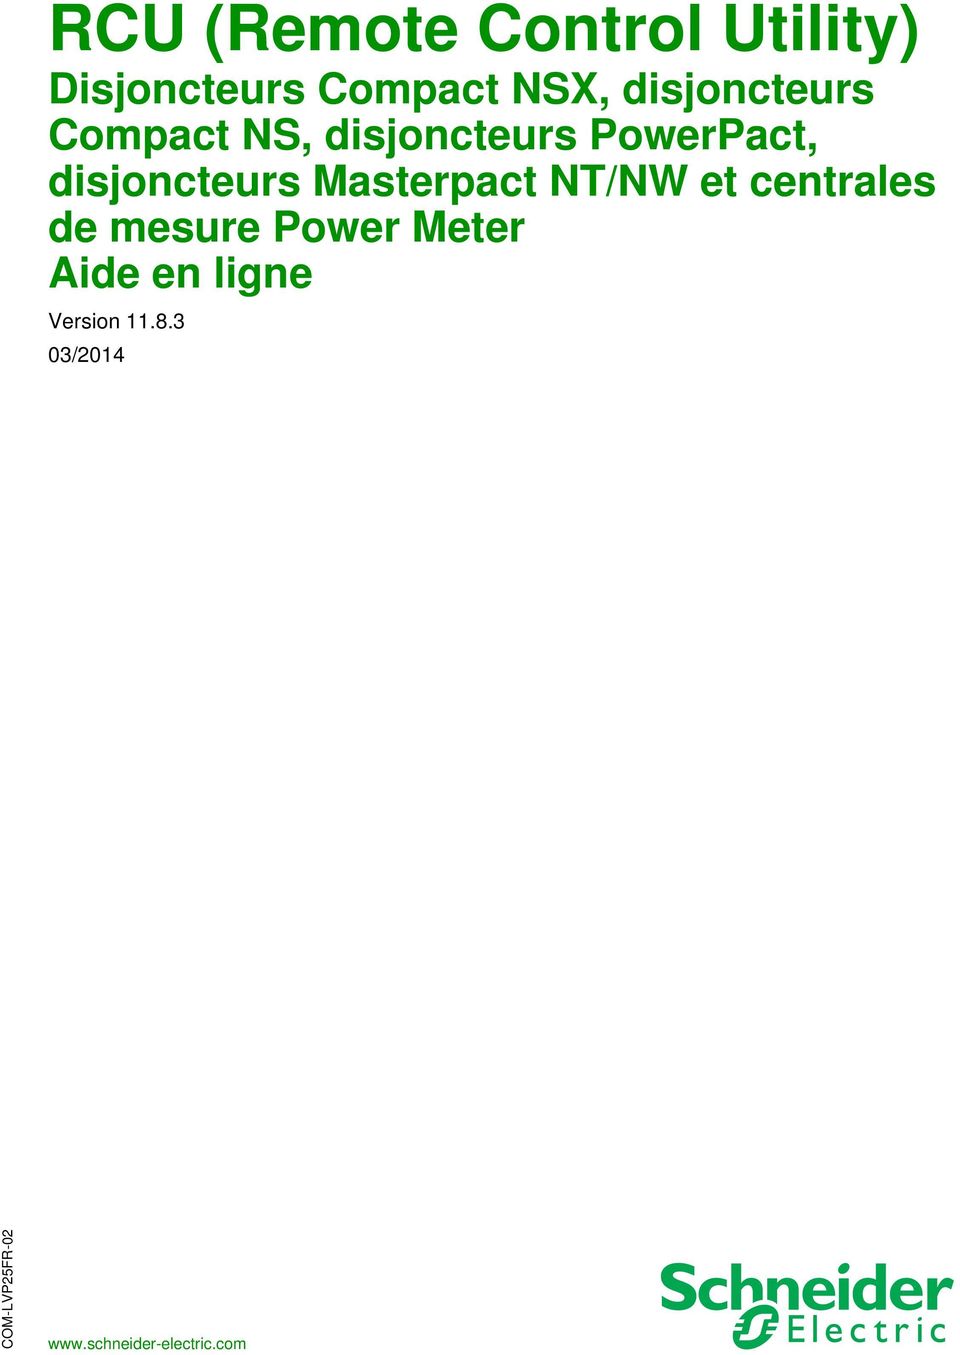 PowerPact, disjoncteurs Masterpact NT/NW et centrales de mesure Power